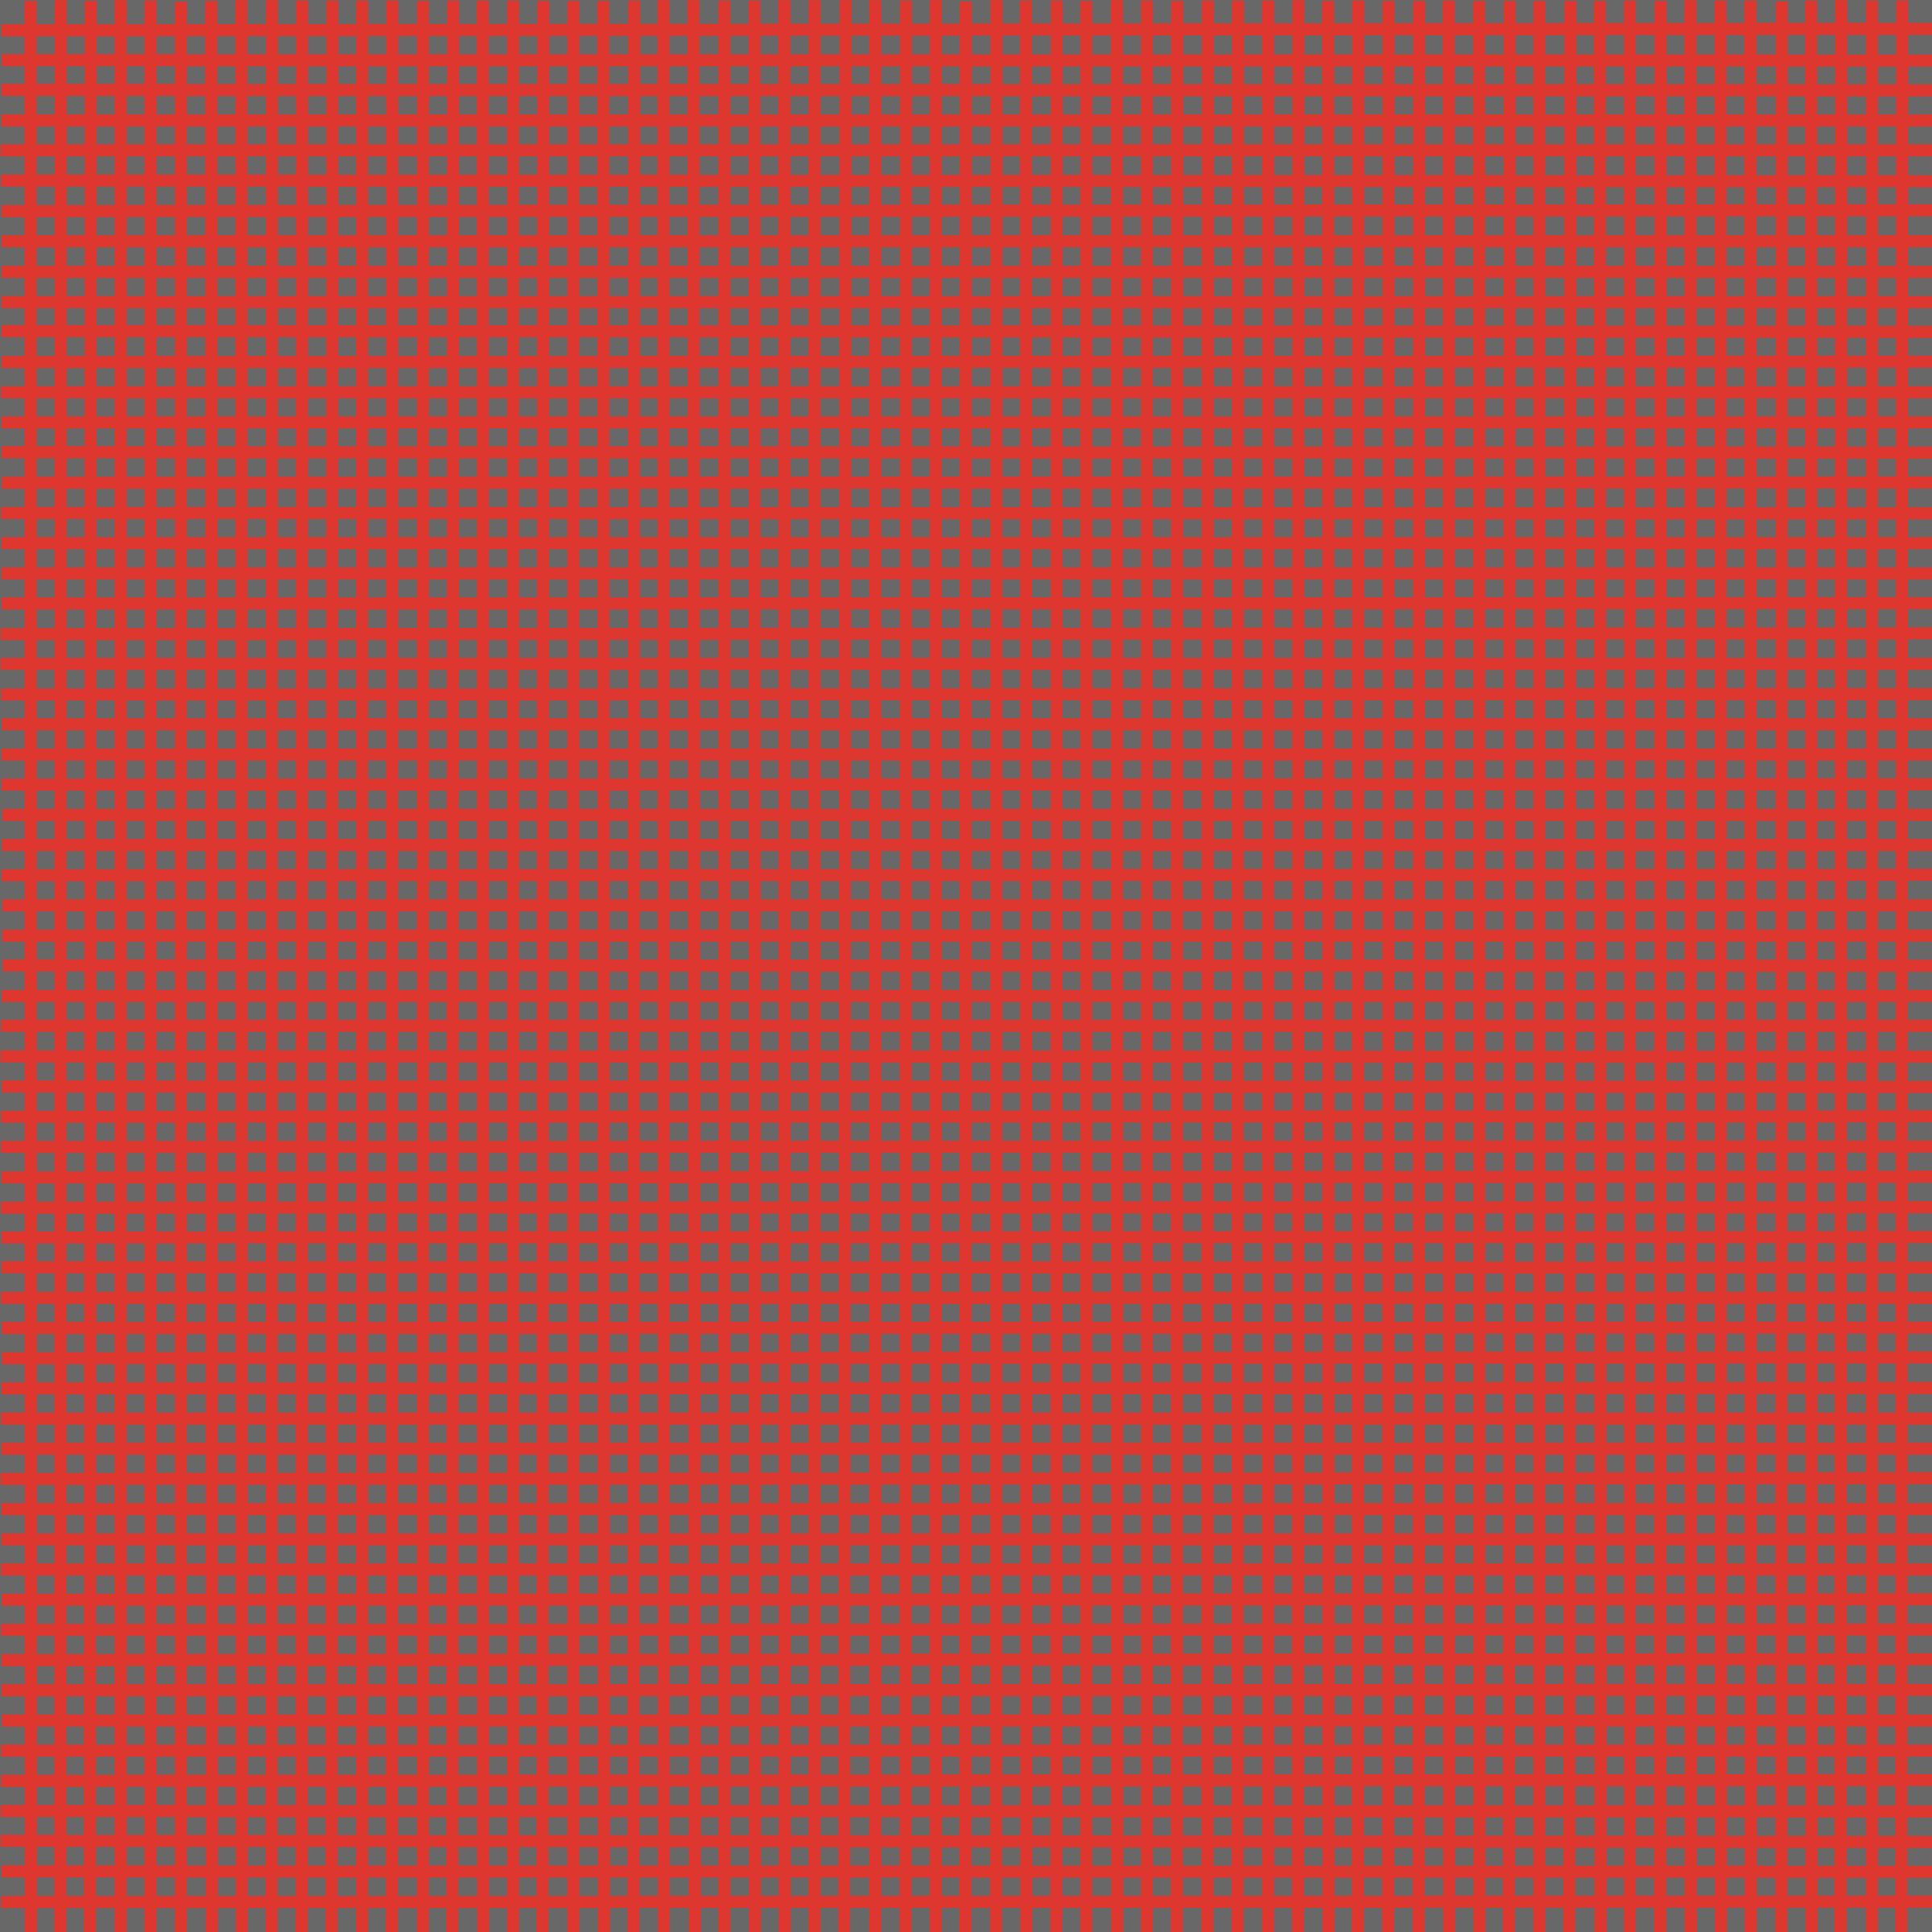 small grid 11 (cadmium red).jpg